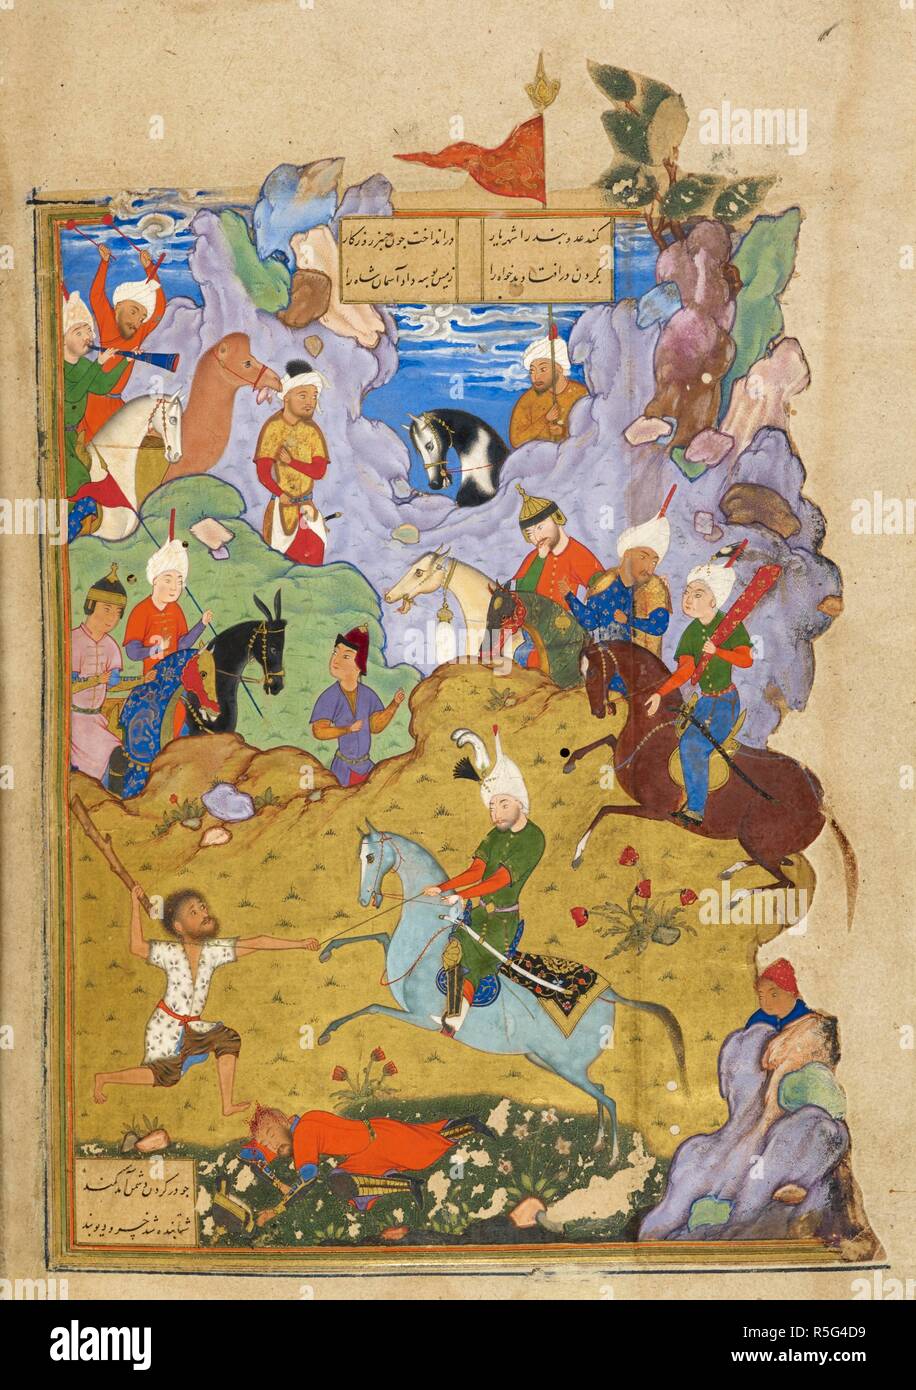 Iskandar lassoing Kintal, the Russian champion. Khamsa by Nizami. Herat, 1442 (manuscript), c.1535-40 (folio). Source: Add. 25900, f.271v. Language: Persian. Stock Photo